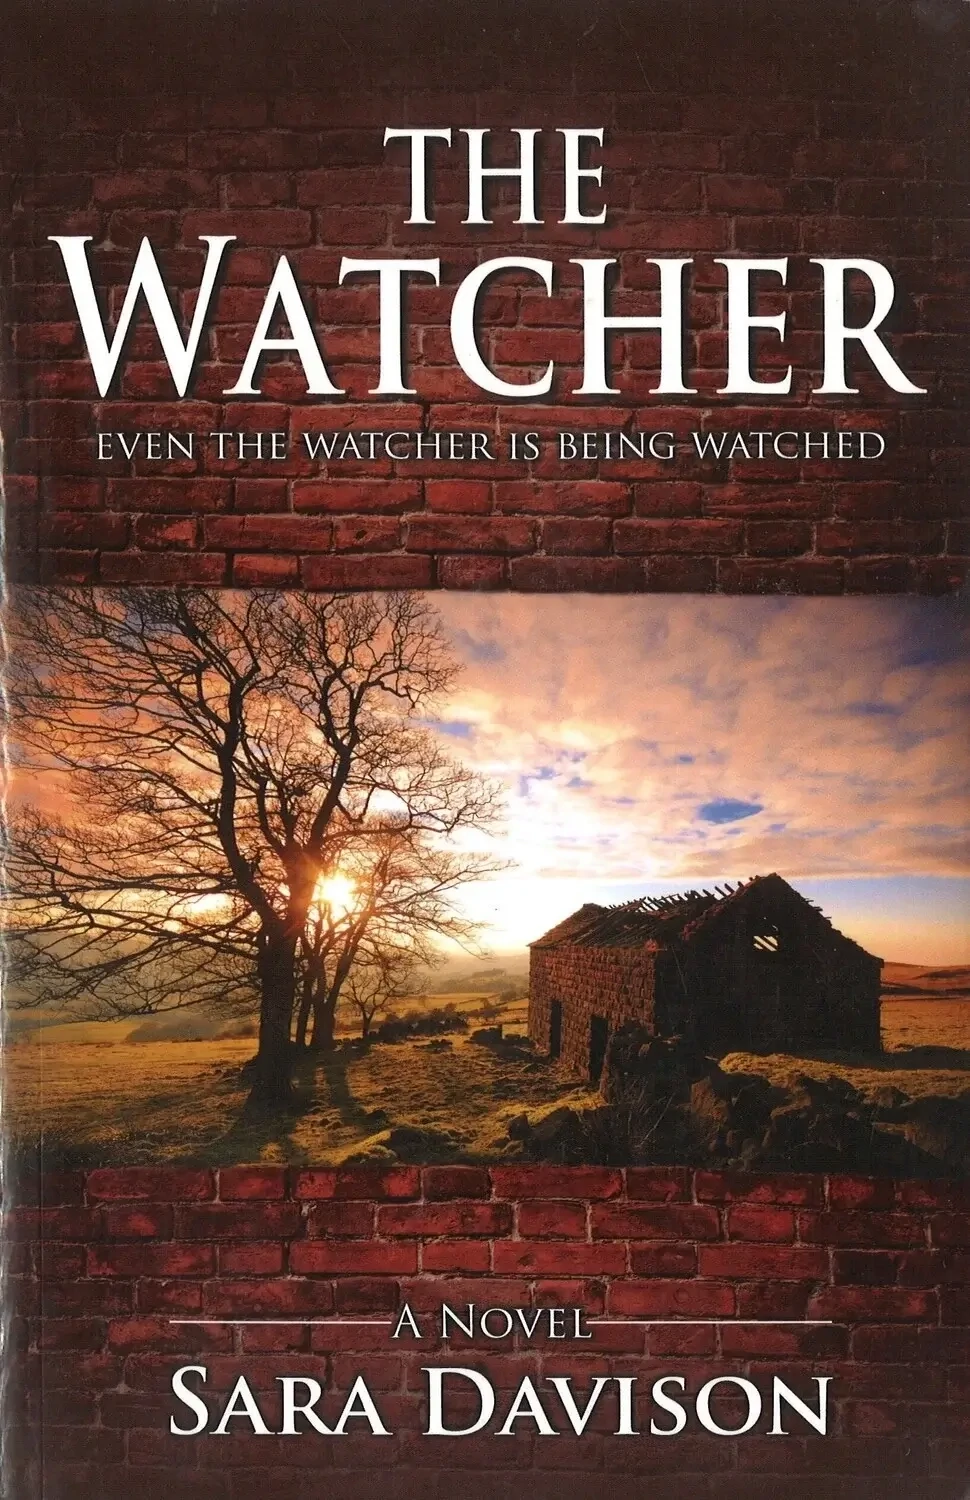 The Watcher (Signed Copy) by Sara Davison